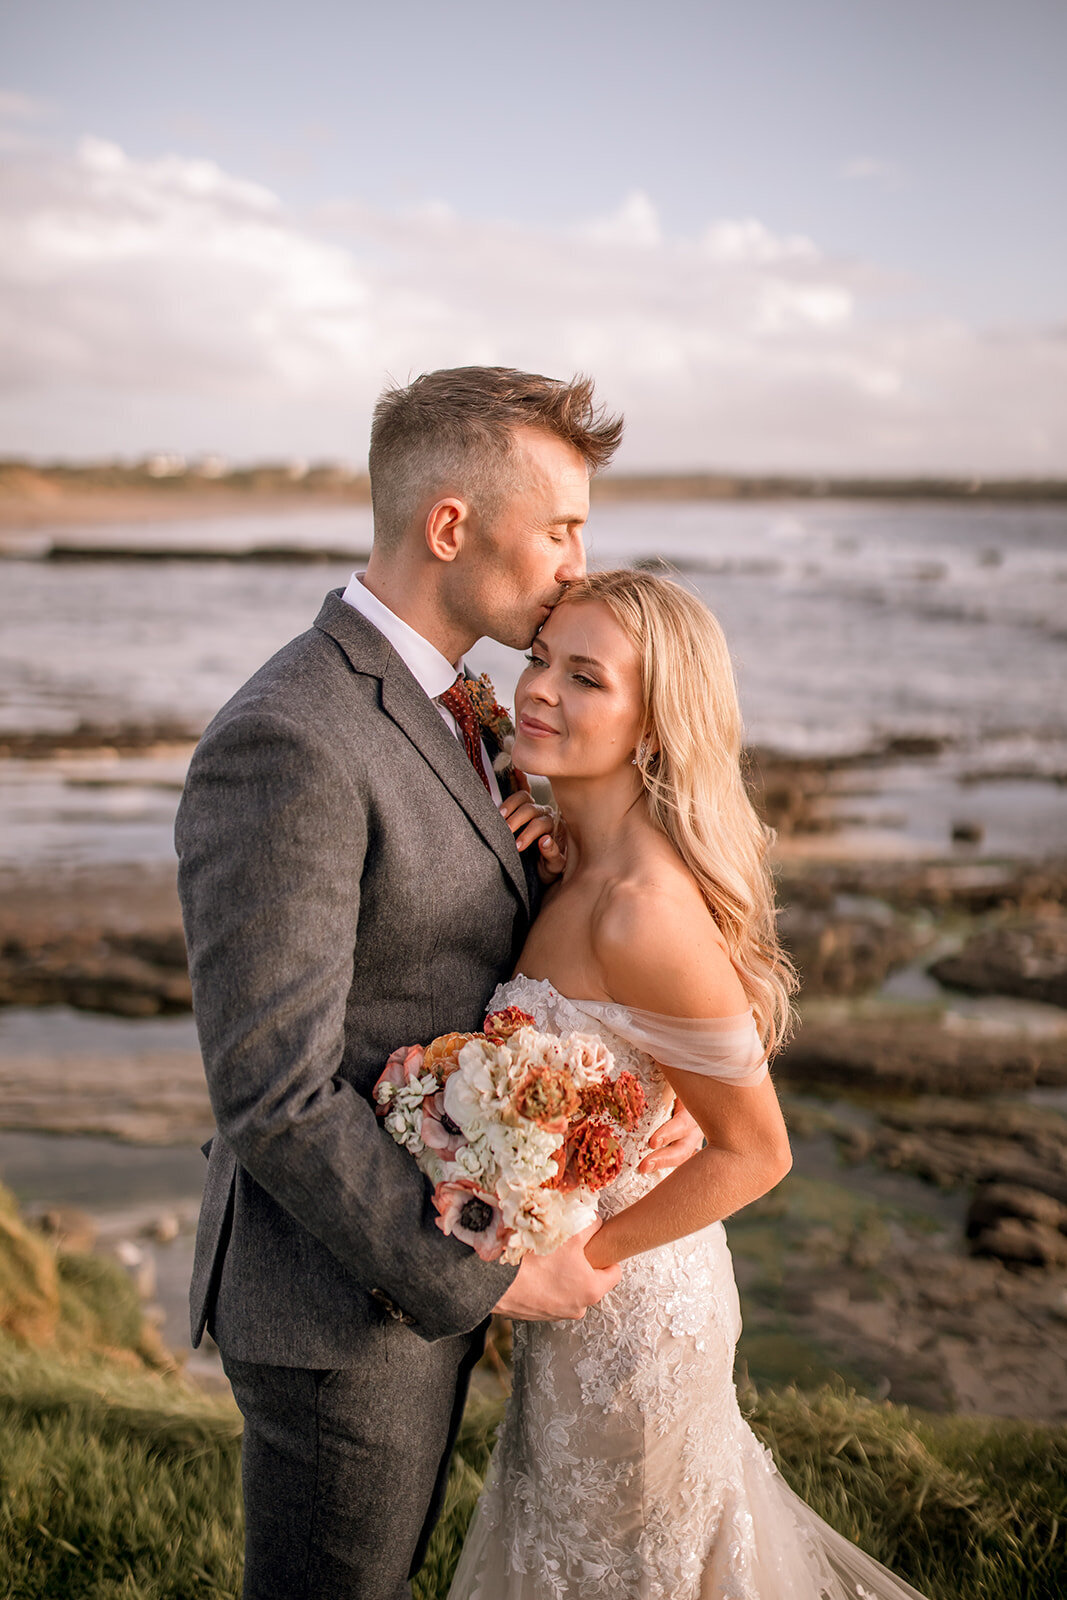 Infusion-wedding-planner-ireland-armada-hotel-Kate-Nolan-920